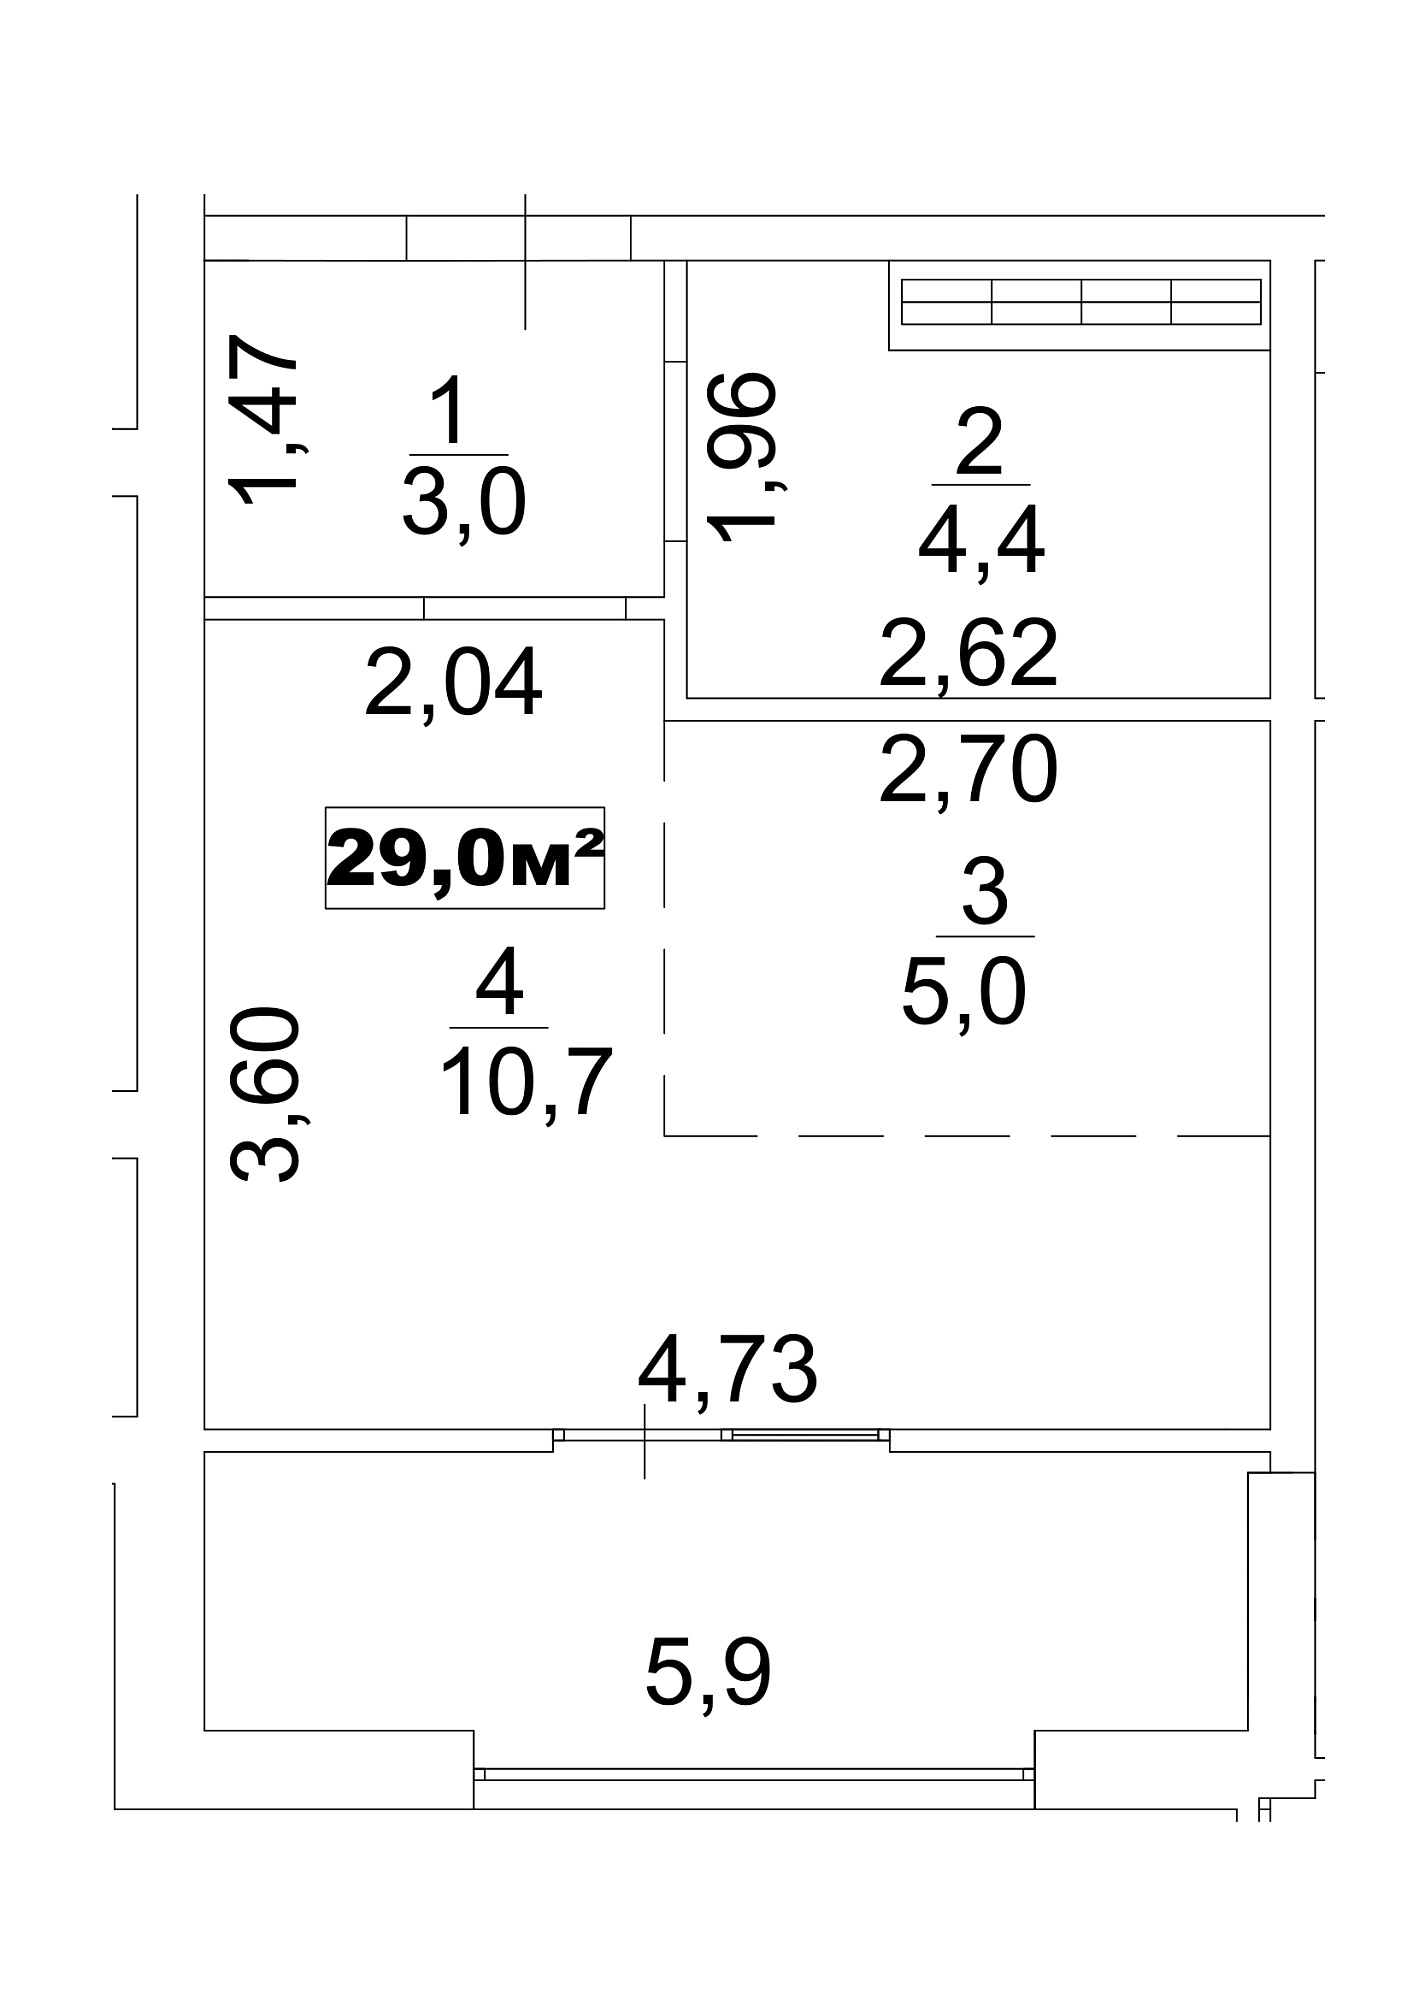 Planning Smart flats area 29m2, AB-13-04/00033.